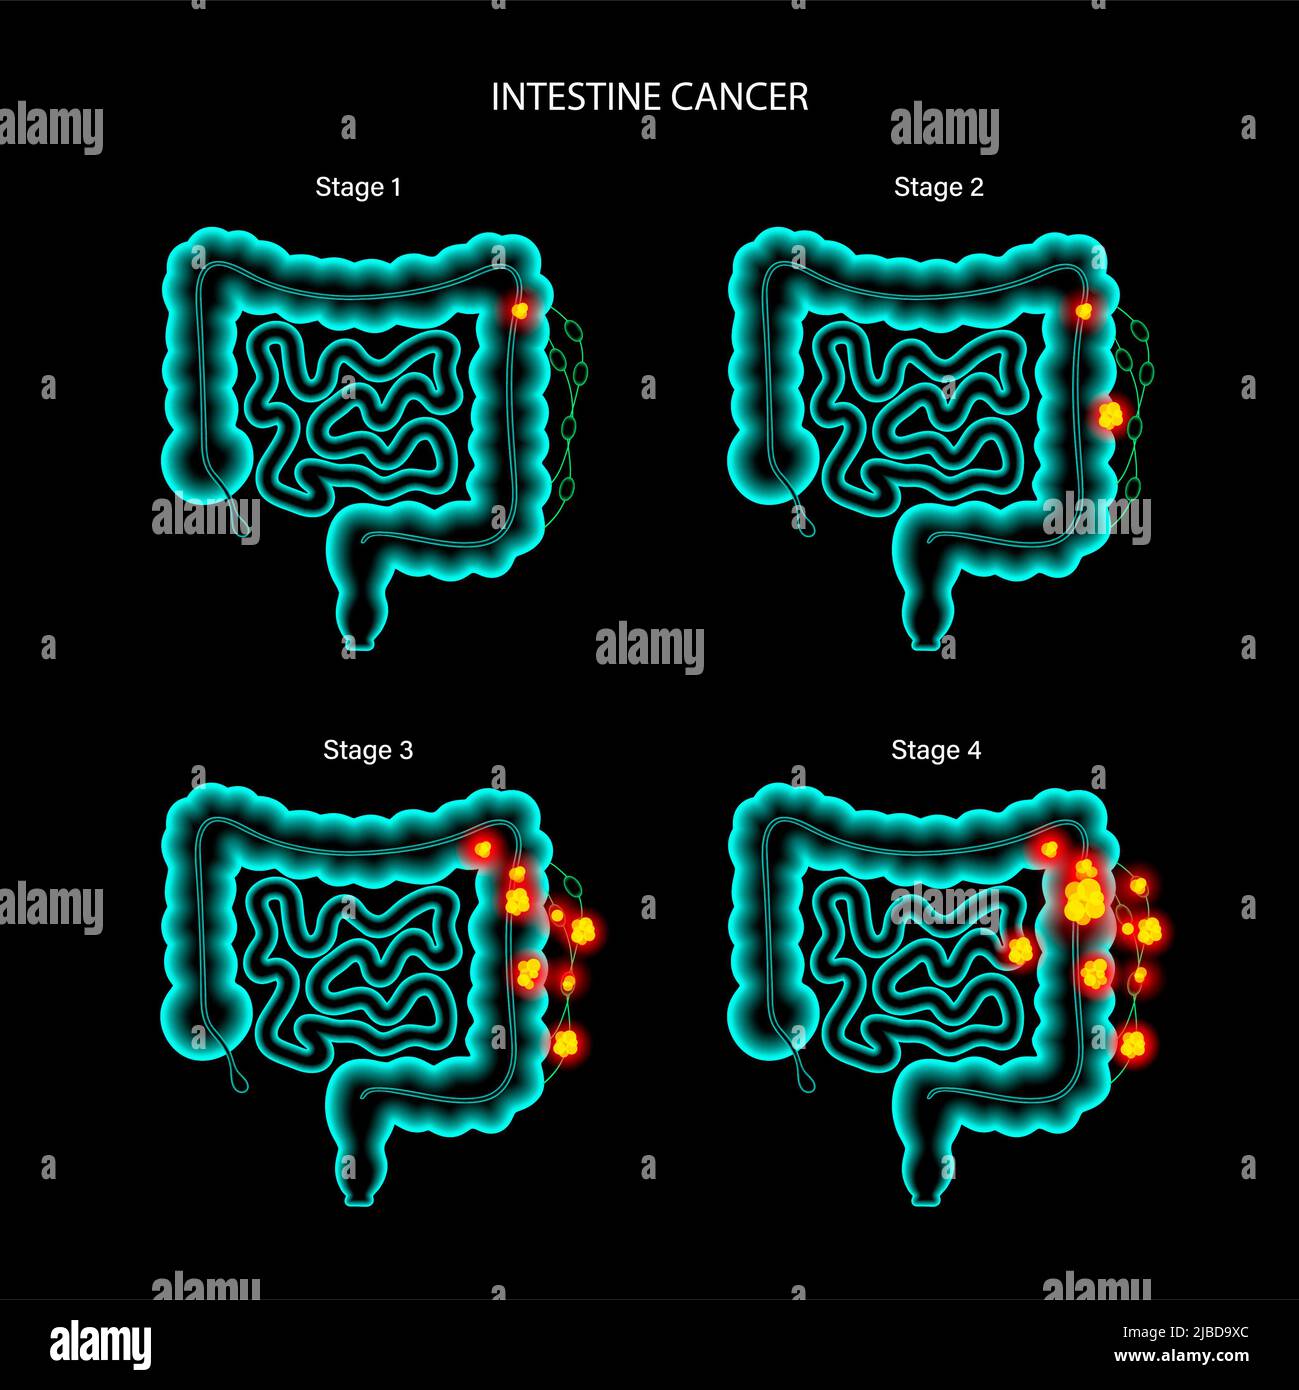 Intestinal cancer, illustration Stock Photo